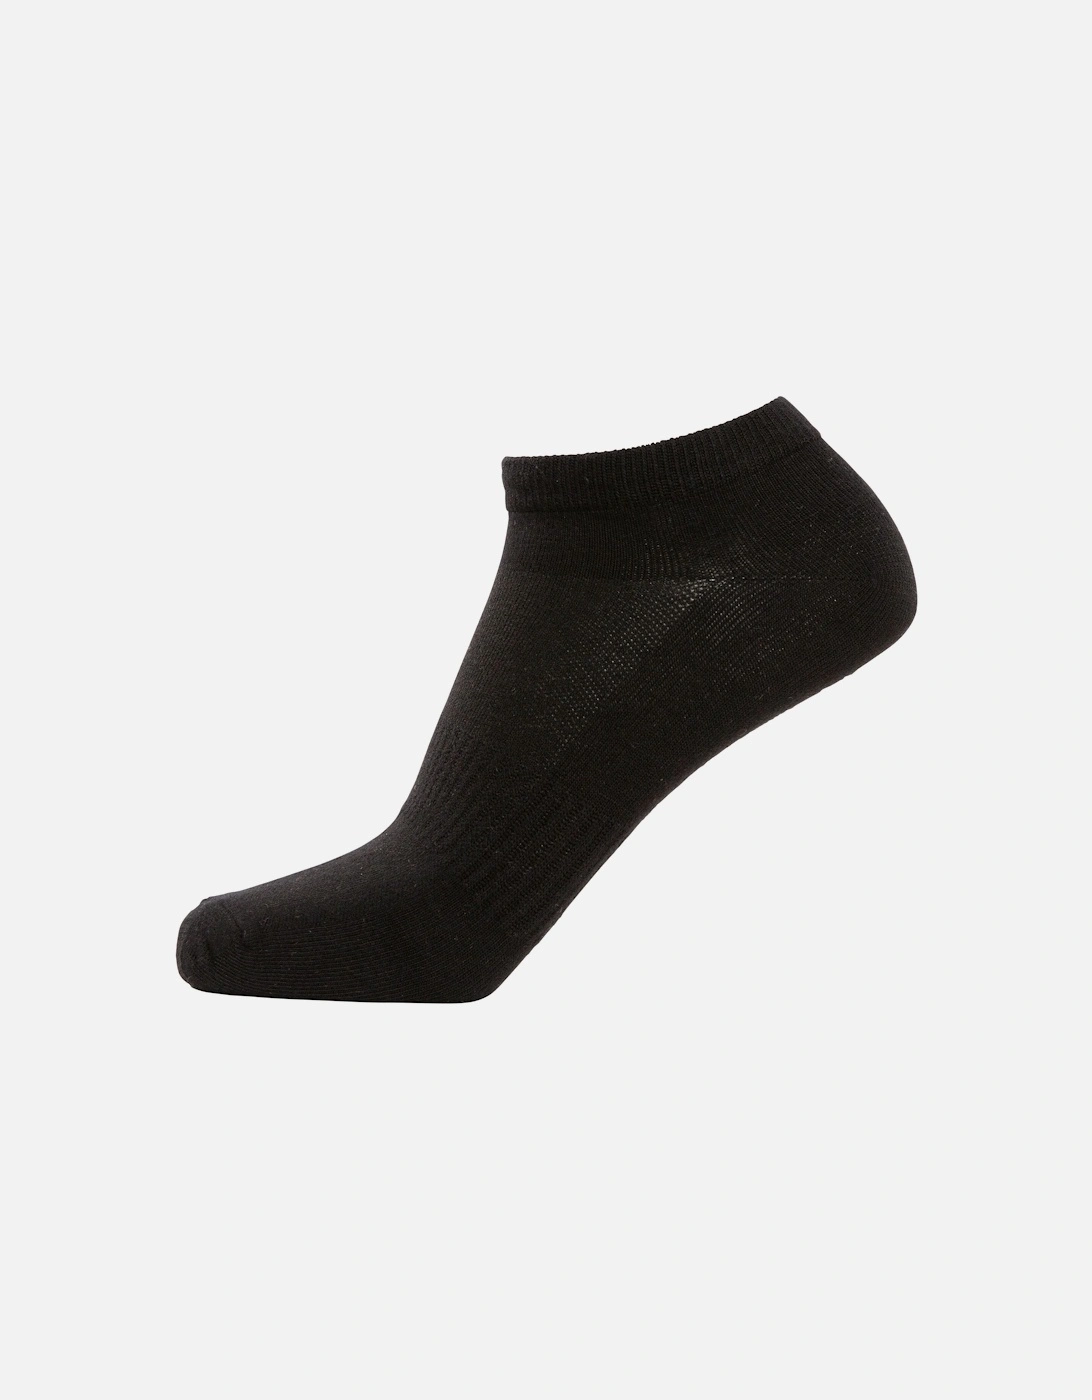 Unisex Adult Orbital Liner Socks (Pack of 5)